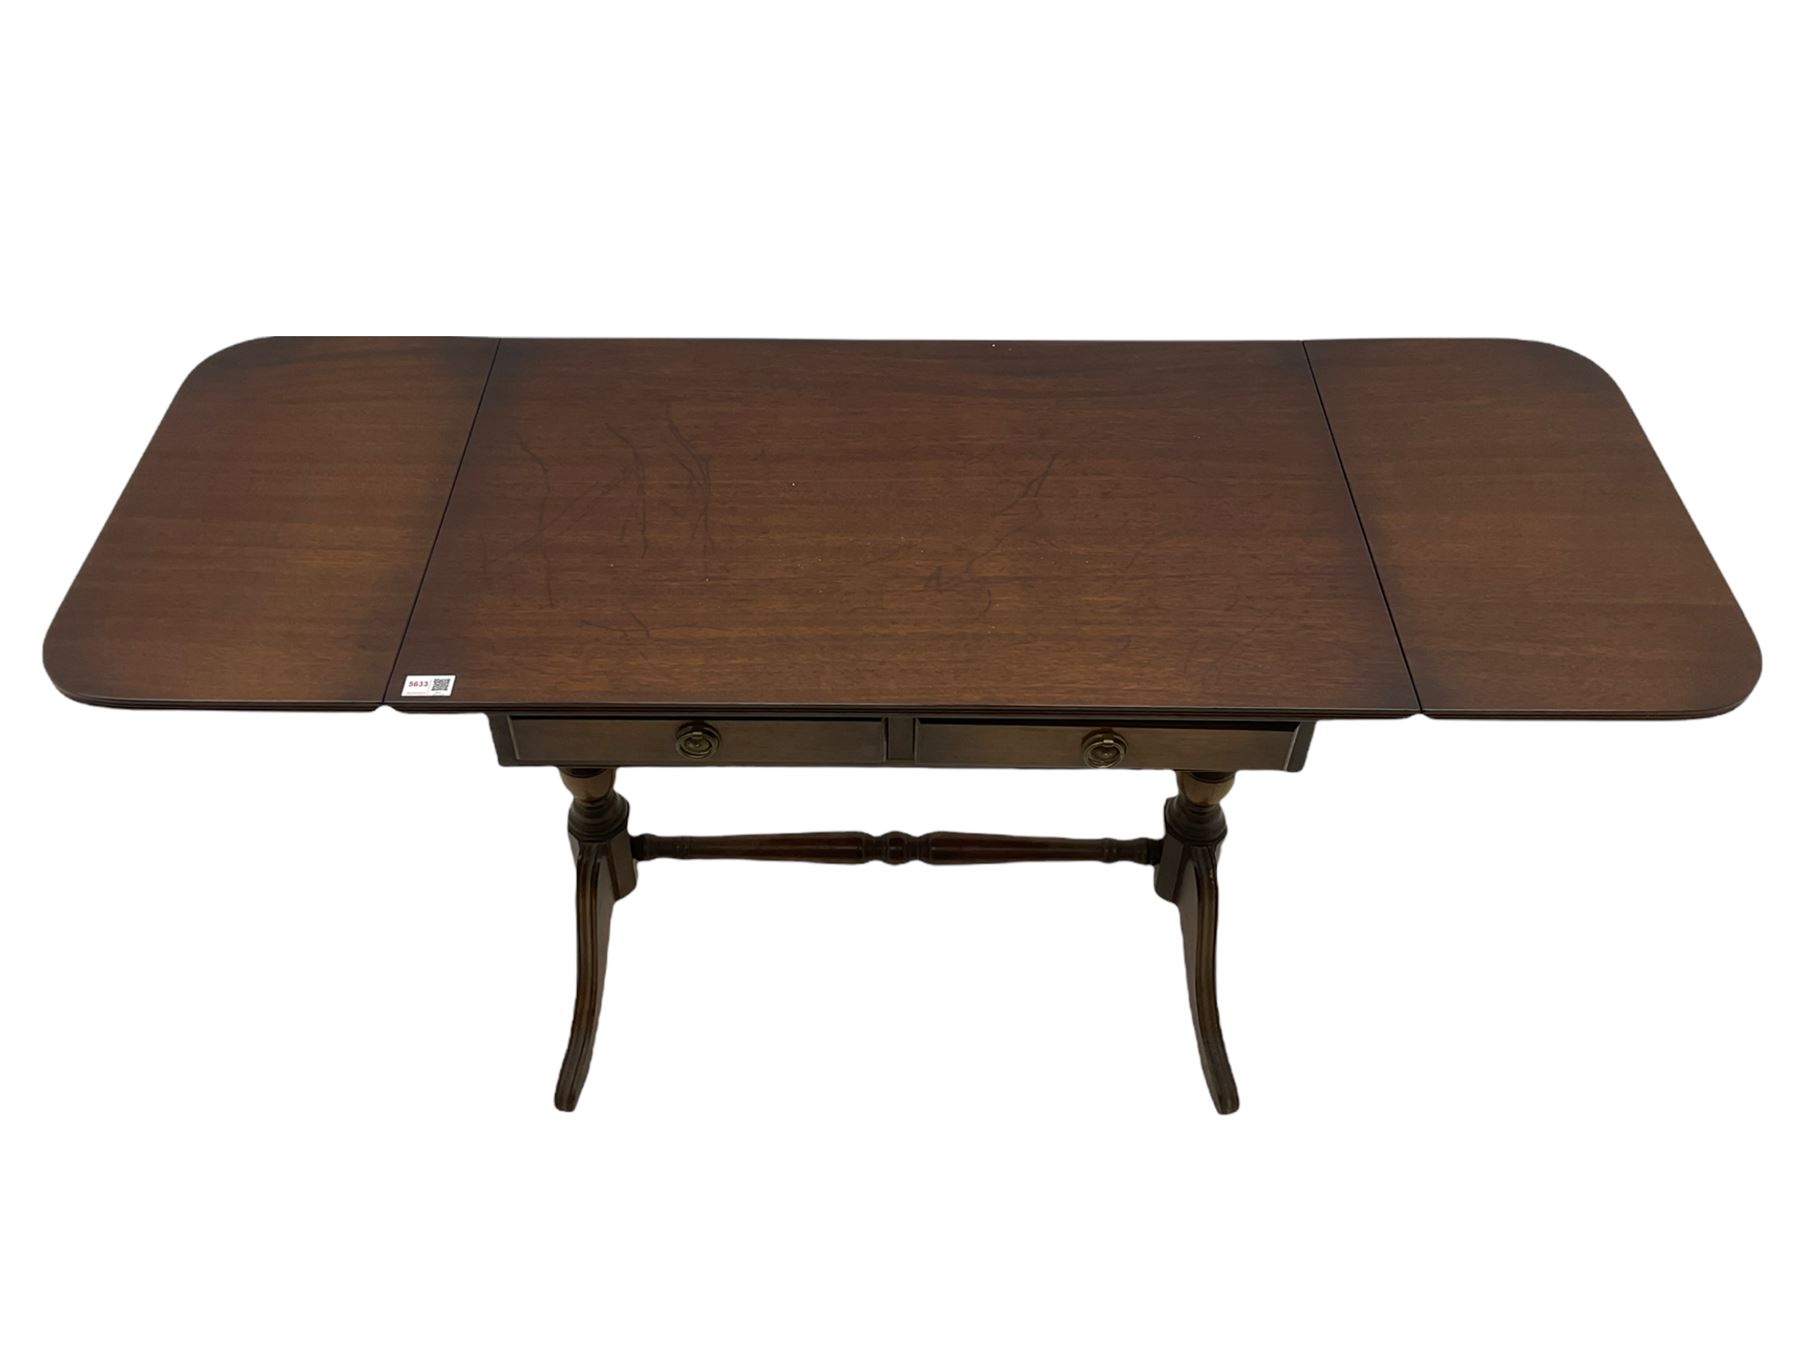 20th century mahogany drop leaf sofa table - Image 6 of 7